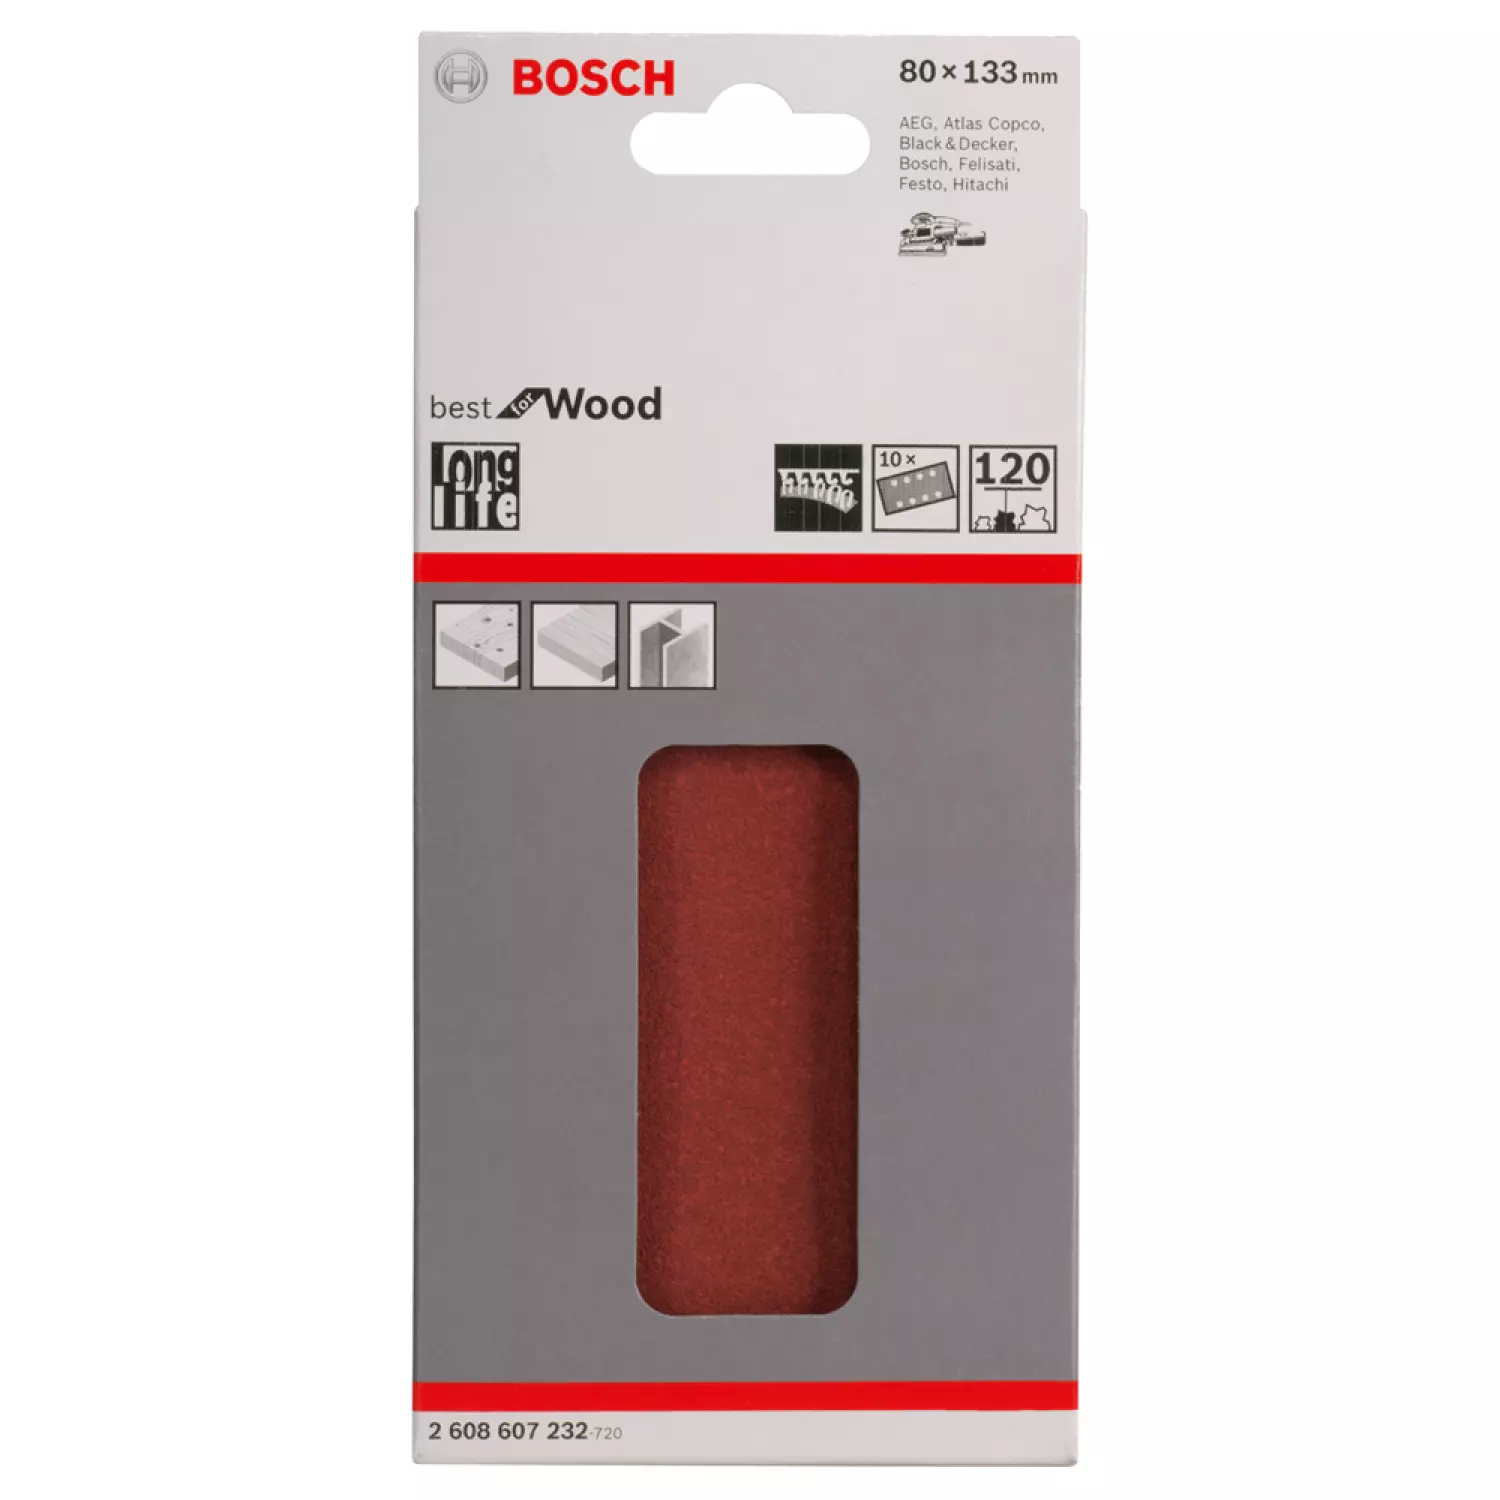 Bosch GSS 160-1 A 3-in-1 Multischuurmachine in L-Boxx - 180W-image